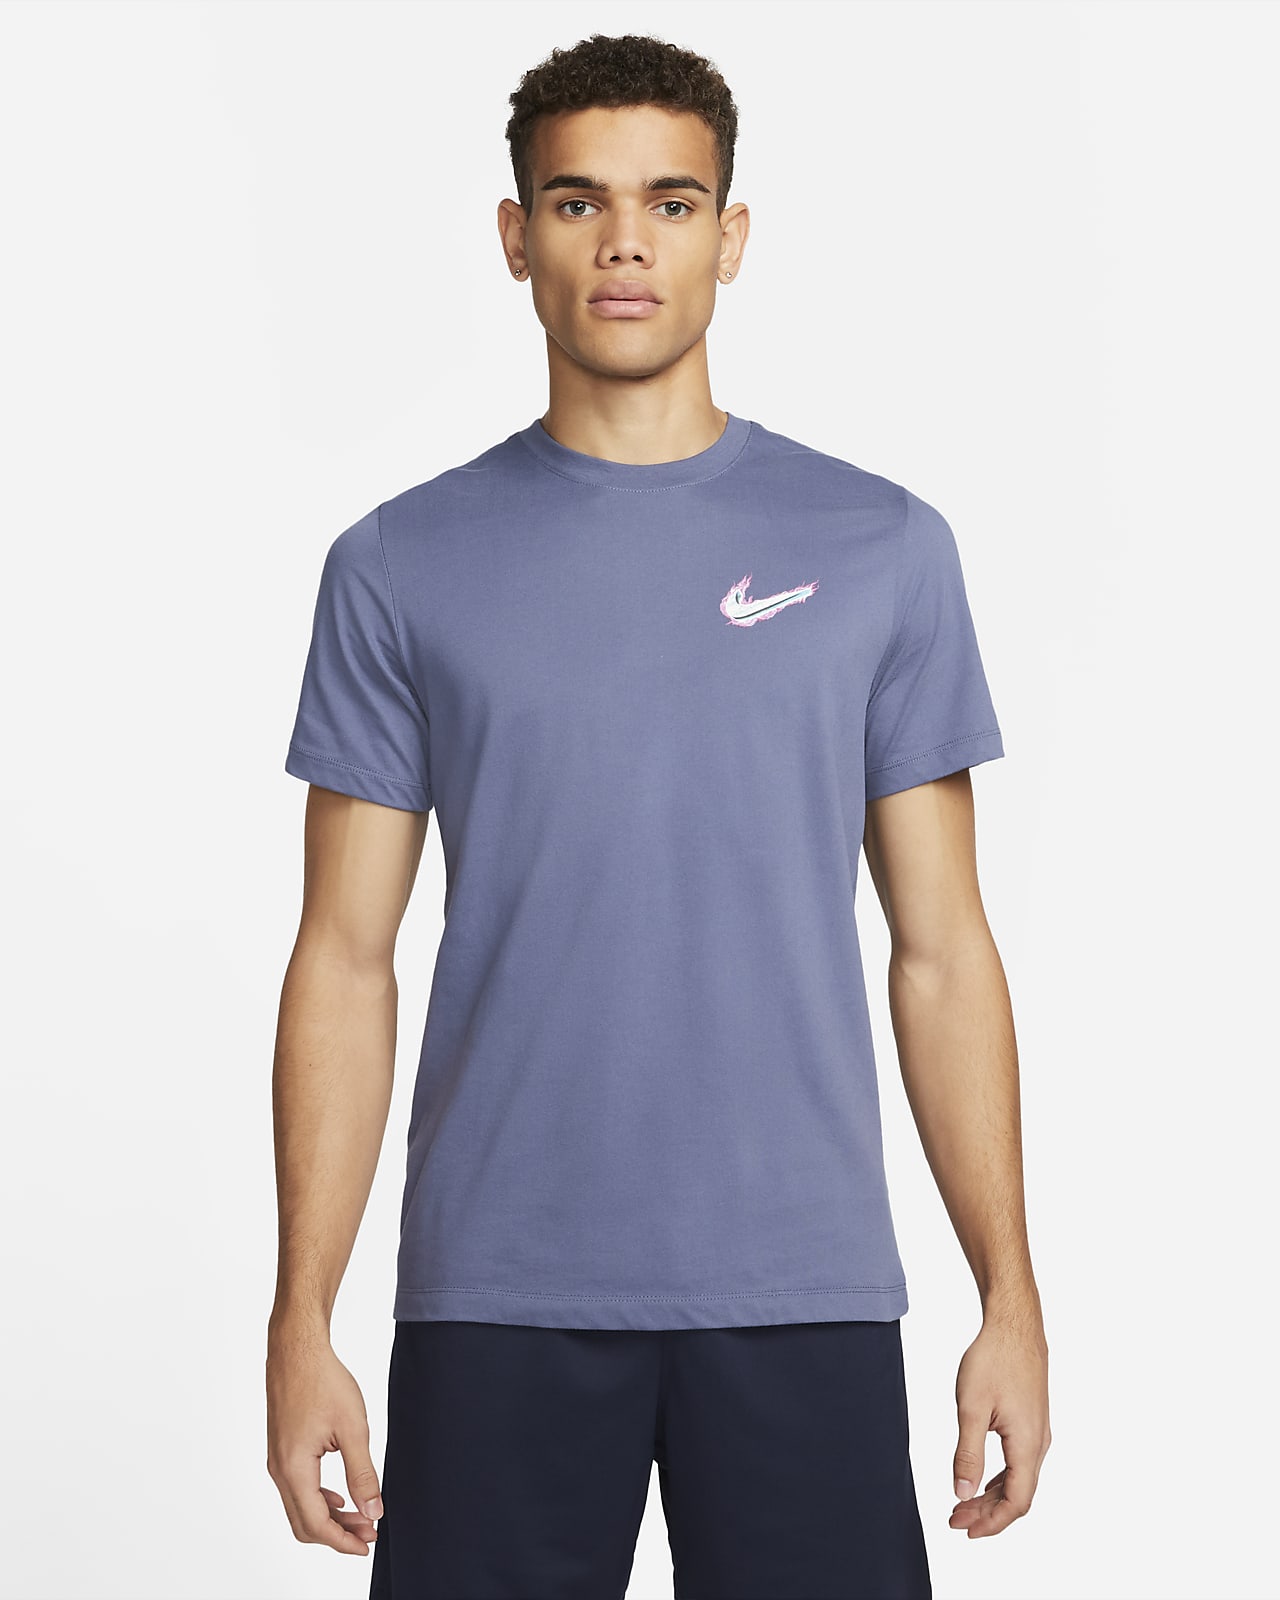 Durf ingenieur overdracht Nike Dri-FIT Fitness T-shirt voor heren. Nike NL